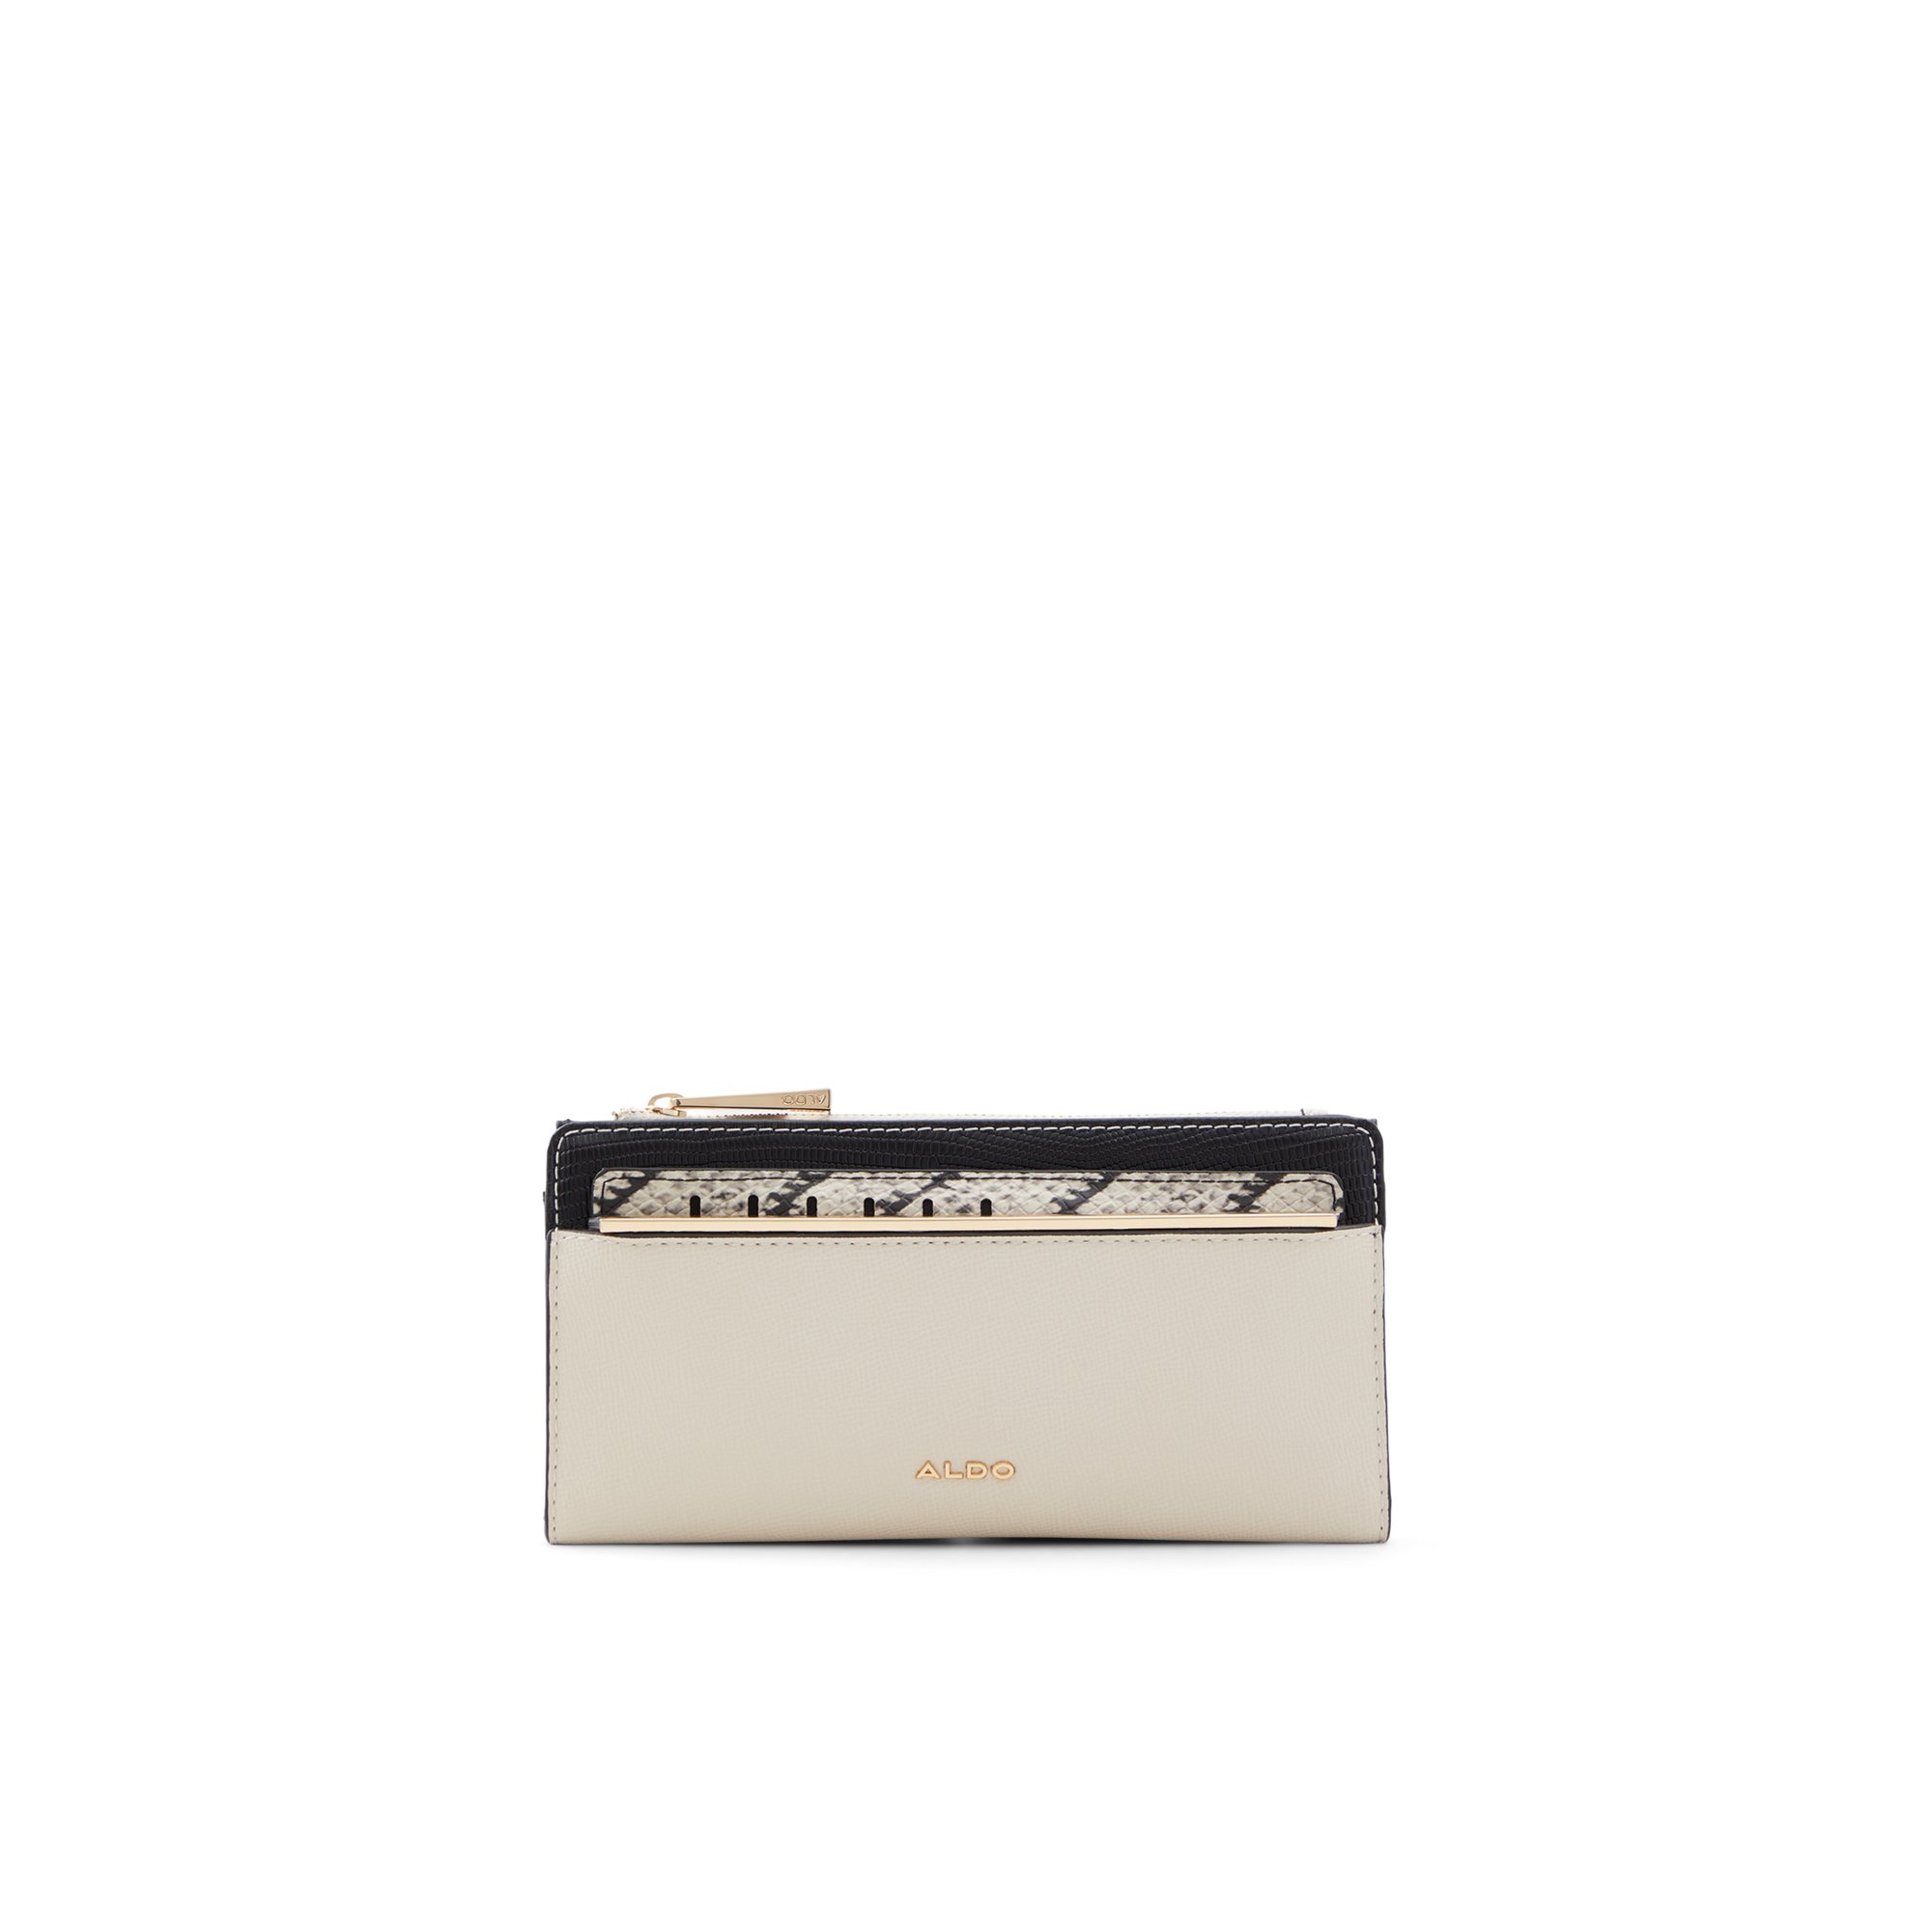 ALDO Ocoissa - Women's Wallet Handbag - Bone